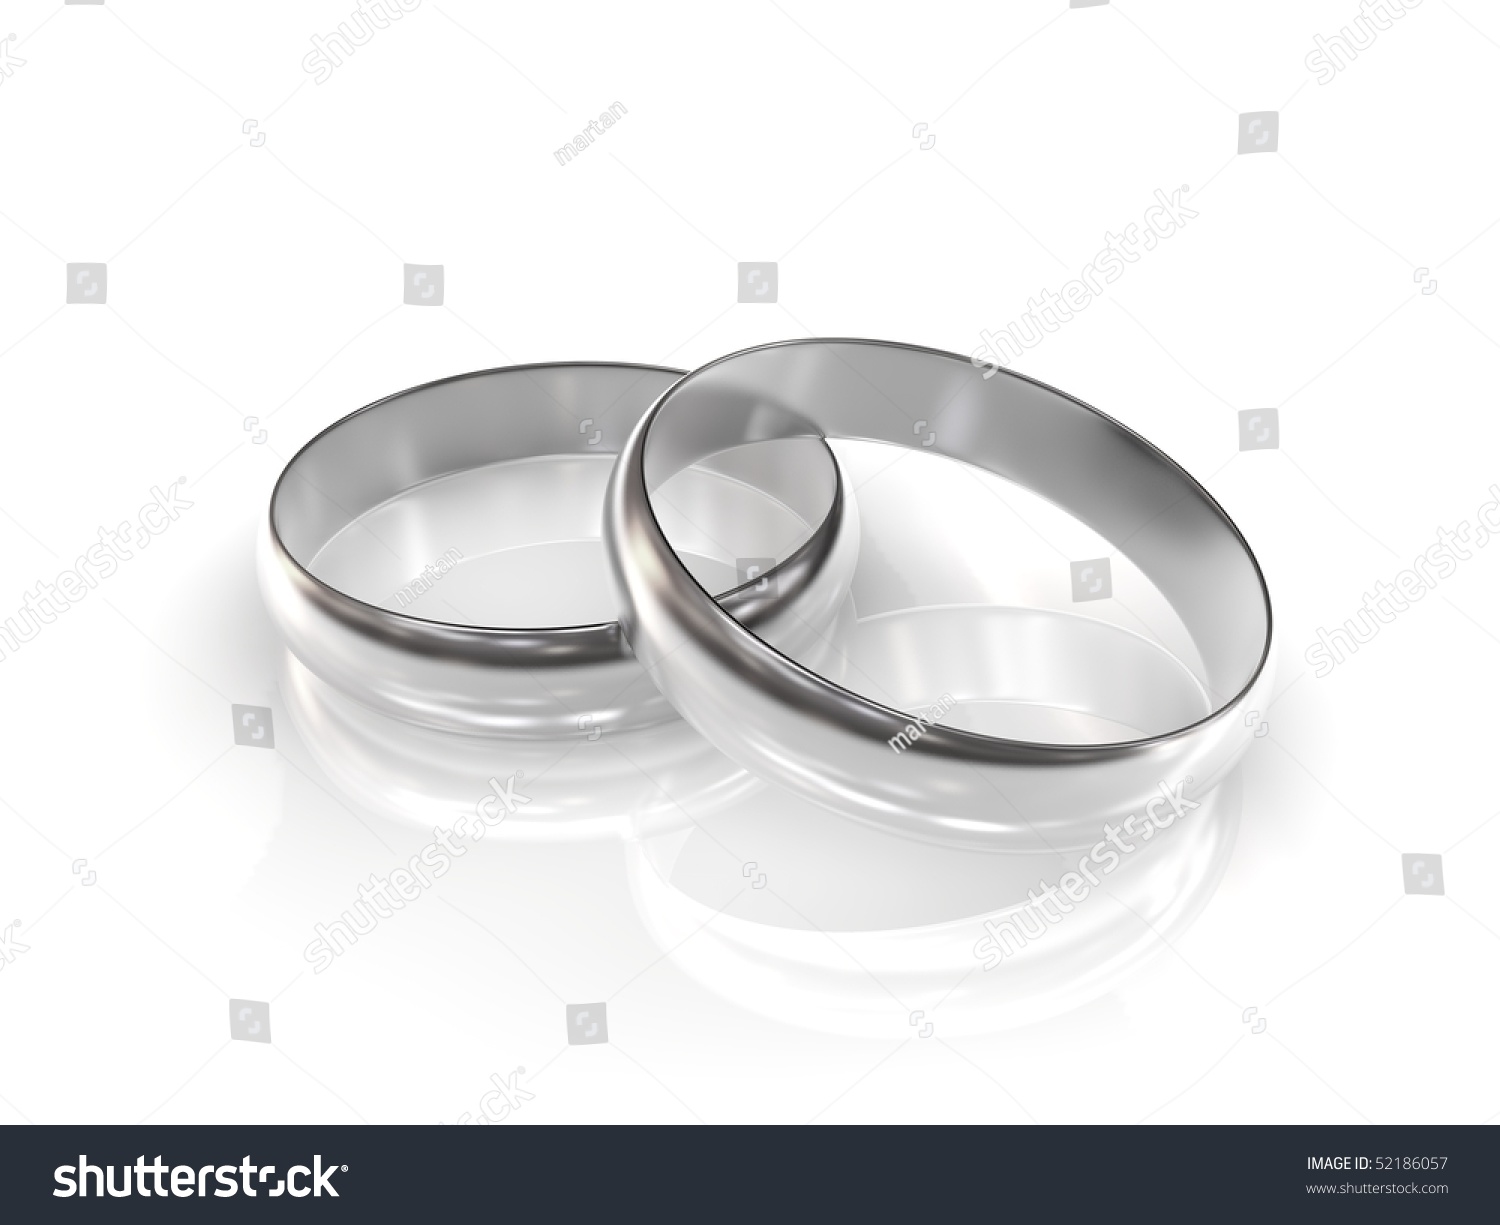 Silver Wedding Rings Stock Photo 52186057 : Shutterstock